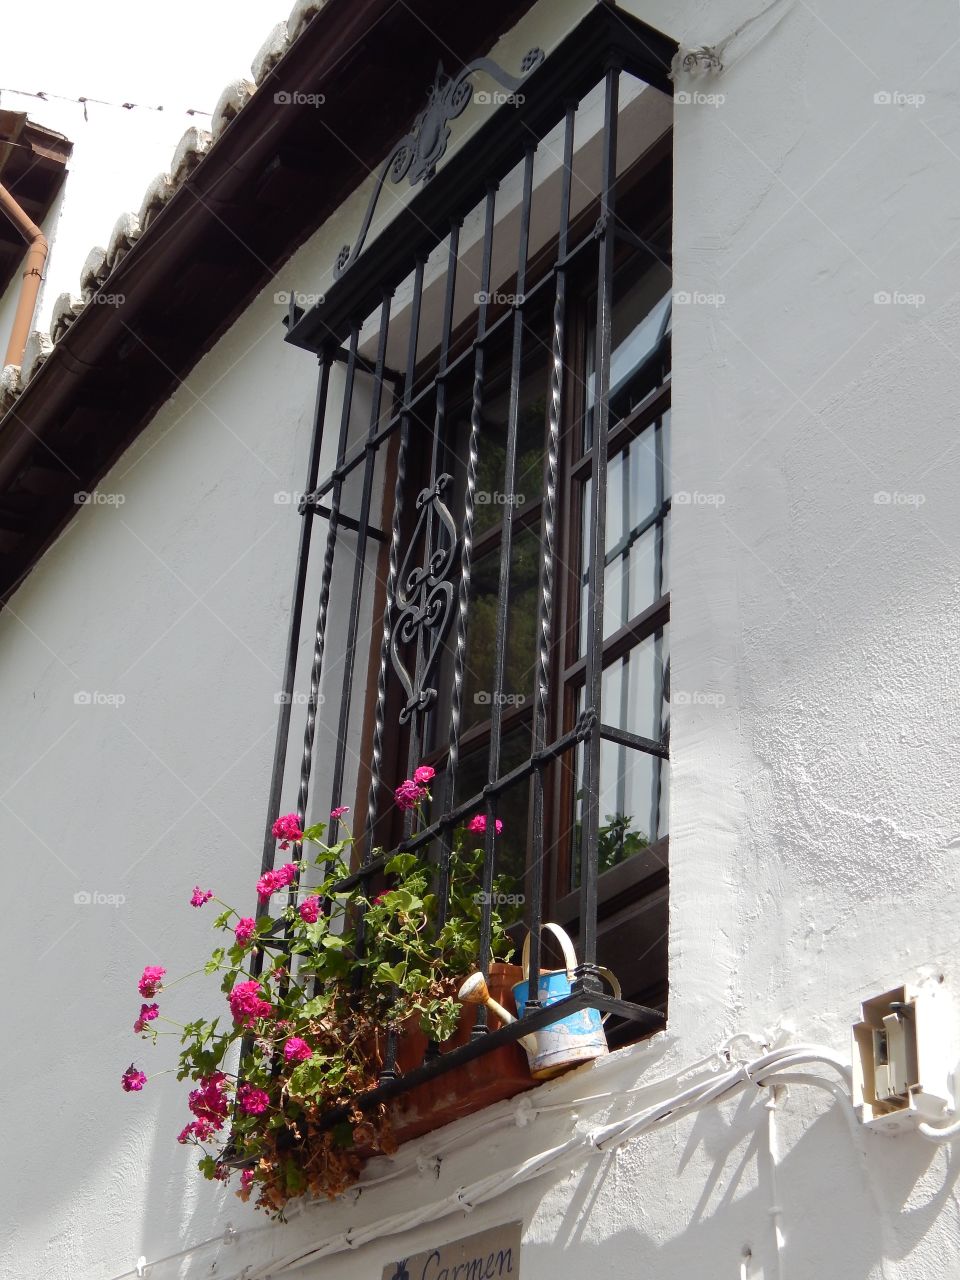 Barred window with flowers in Granada, Spain